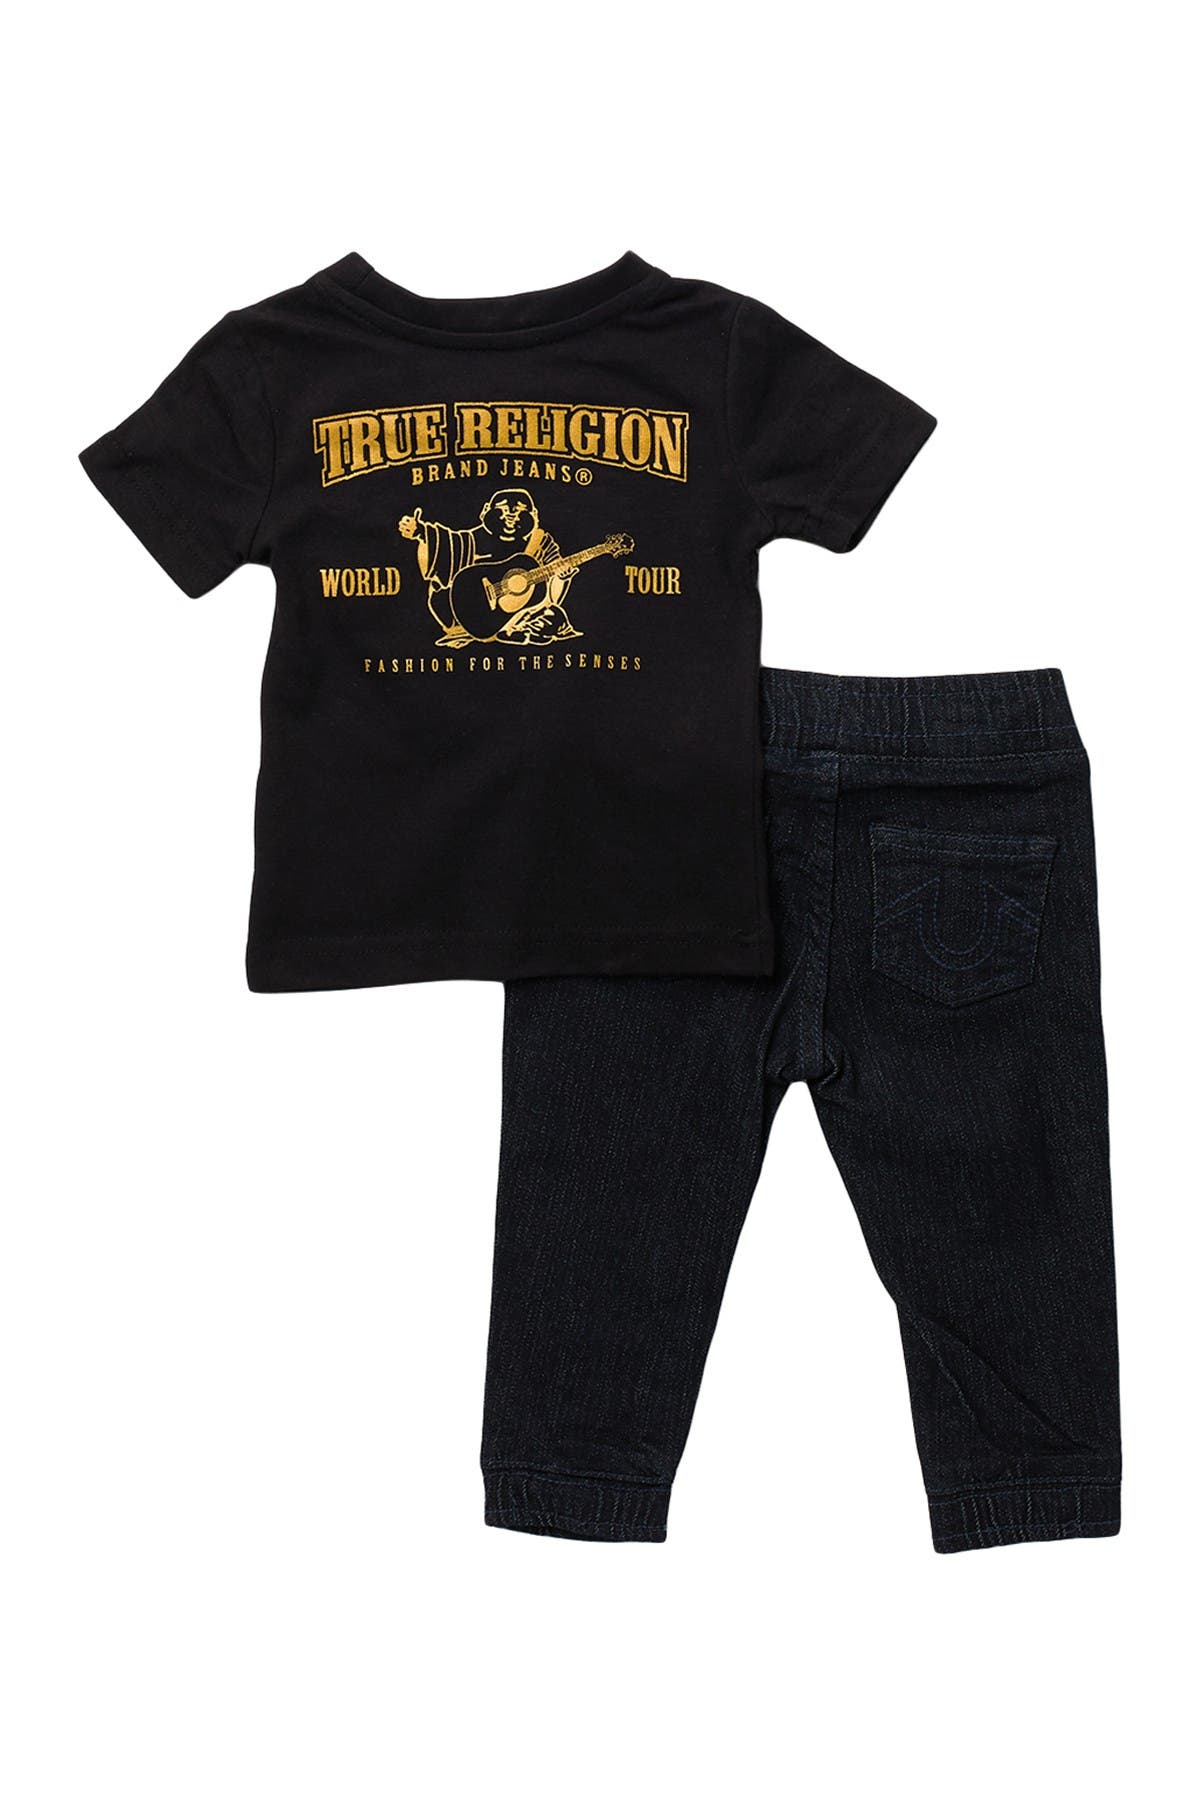 true religion baby boy jeans